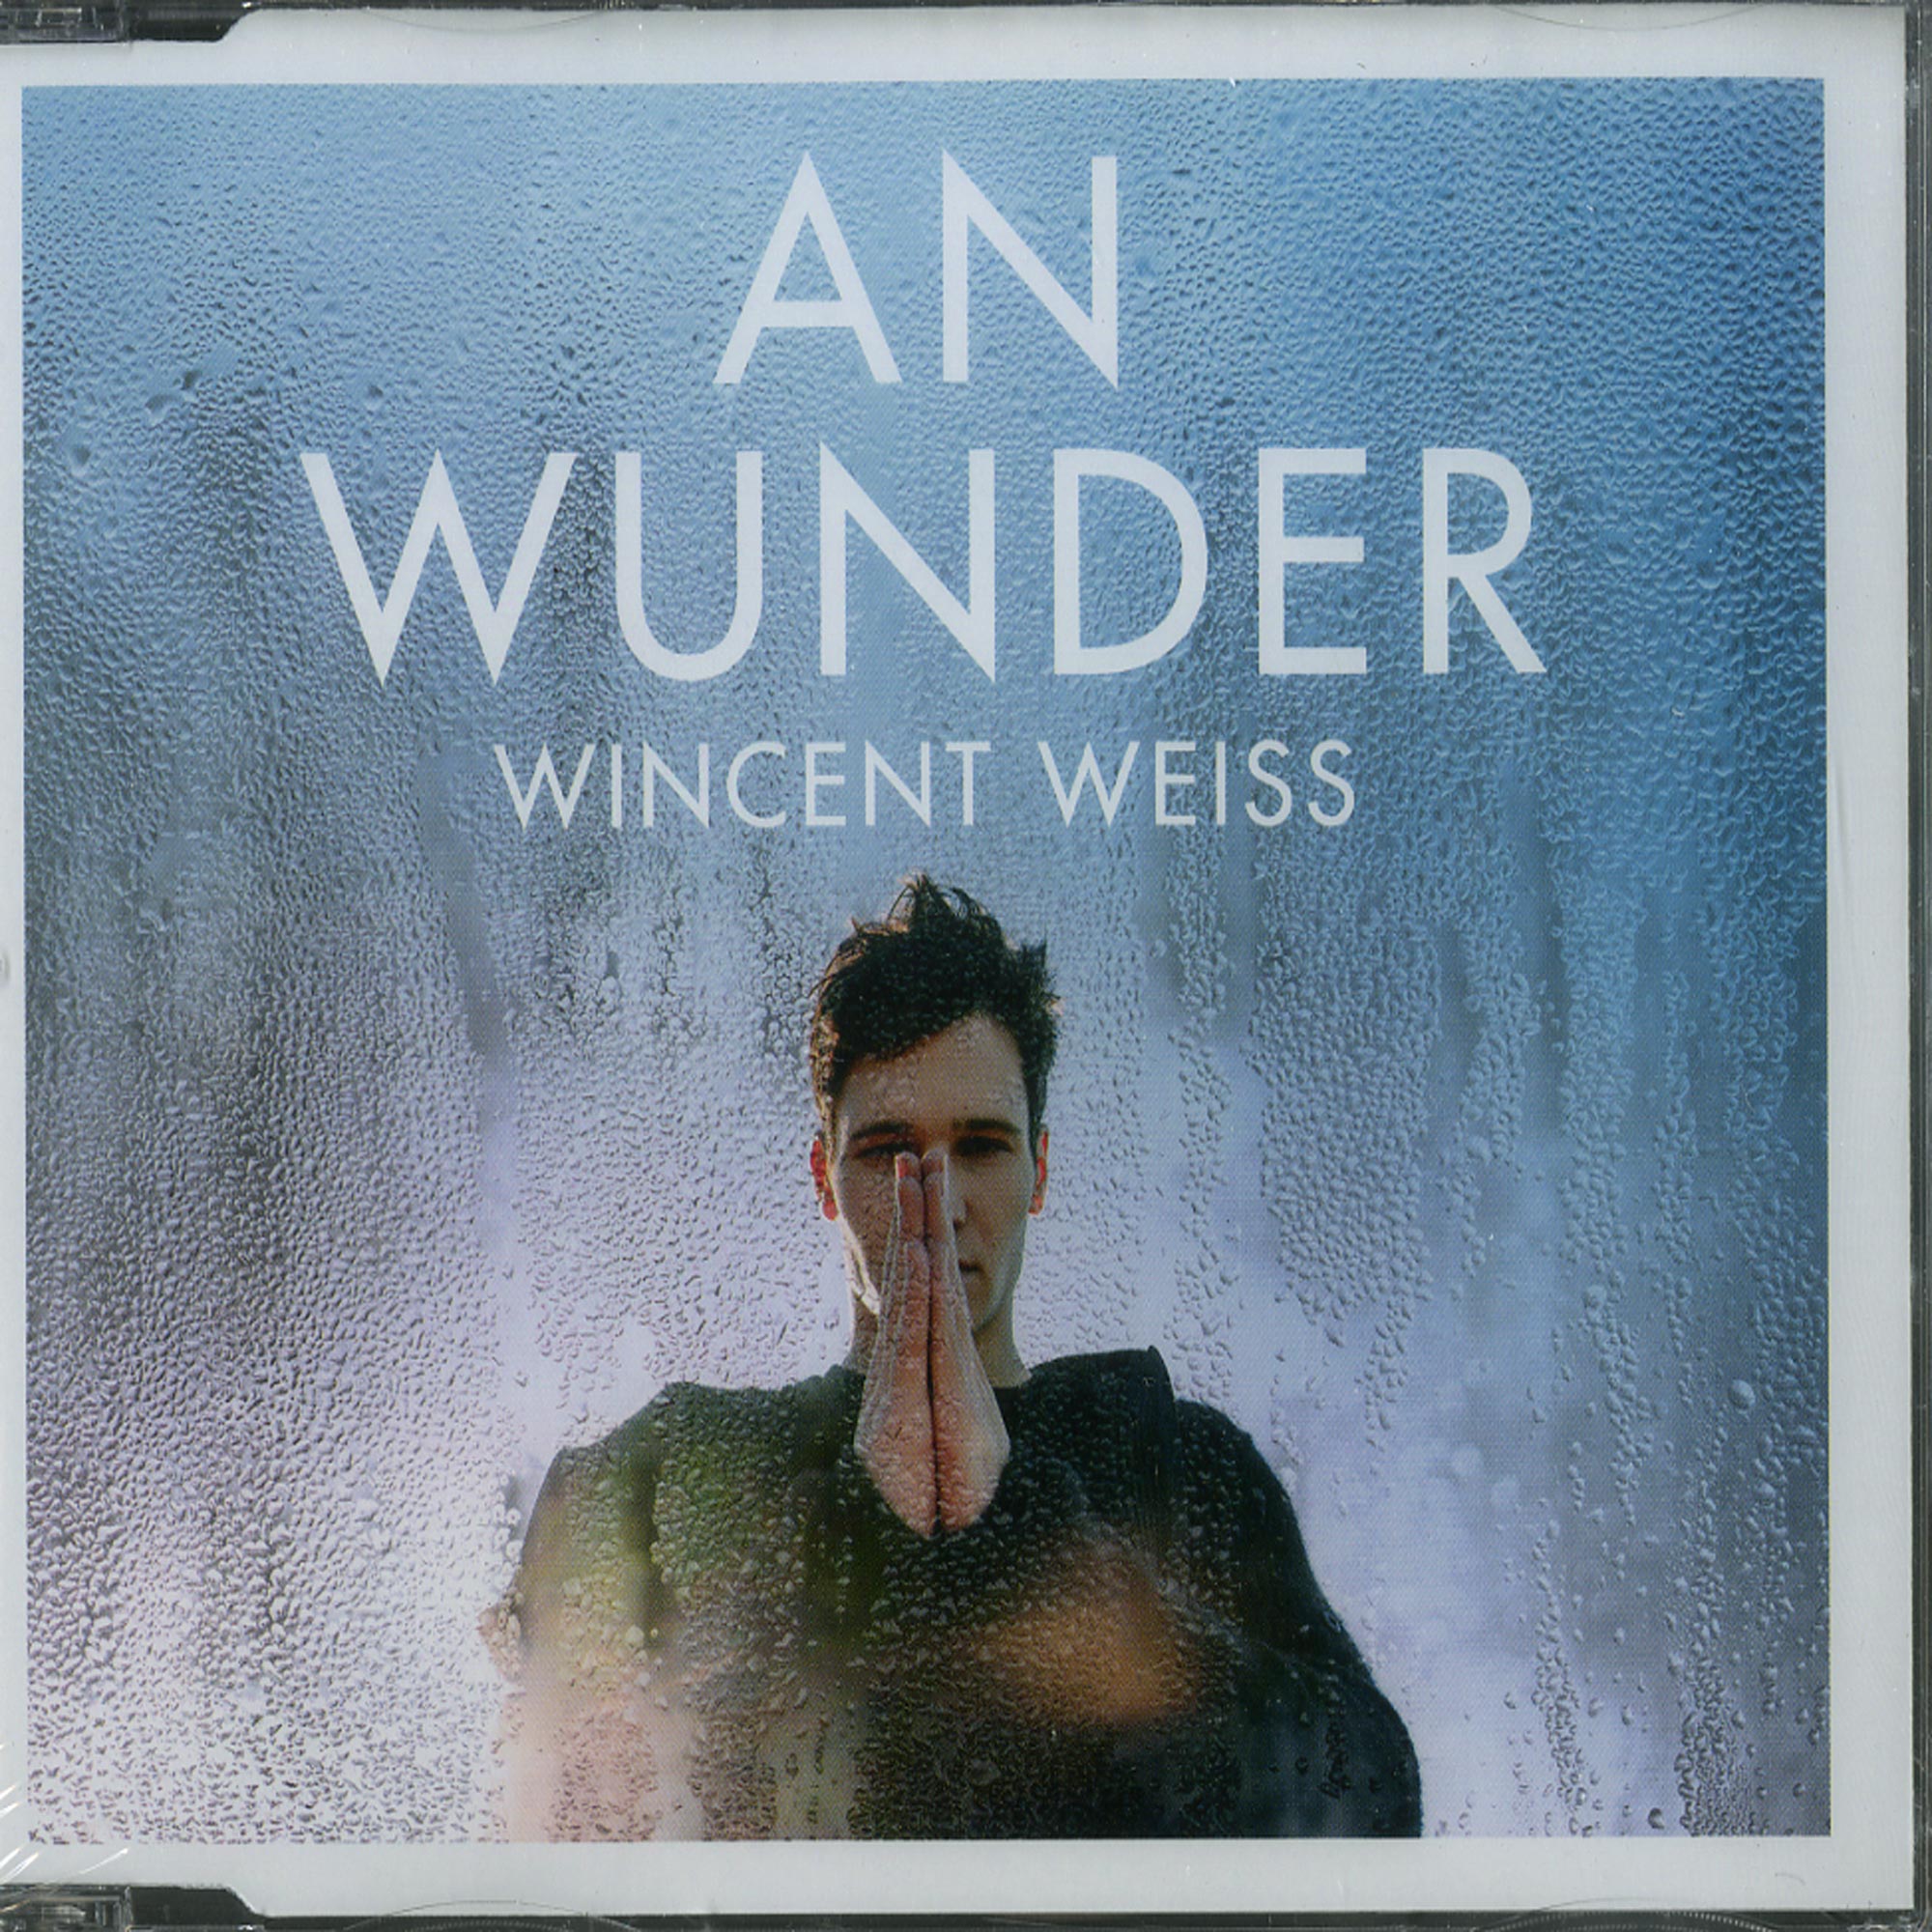 free wincent weiss album download